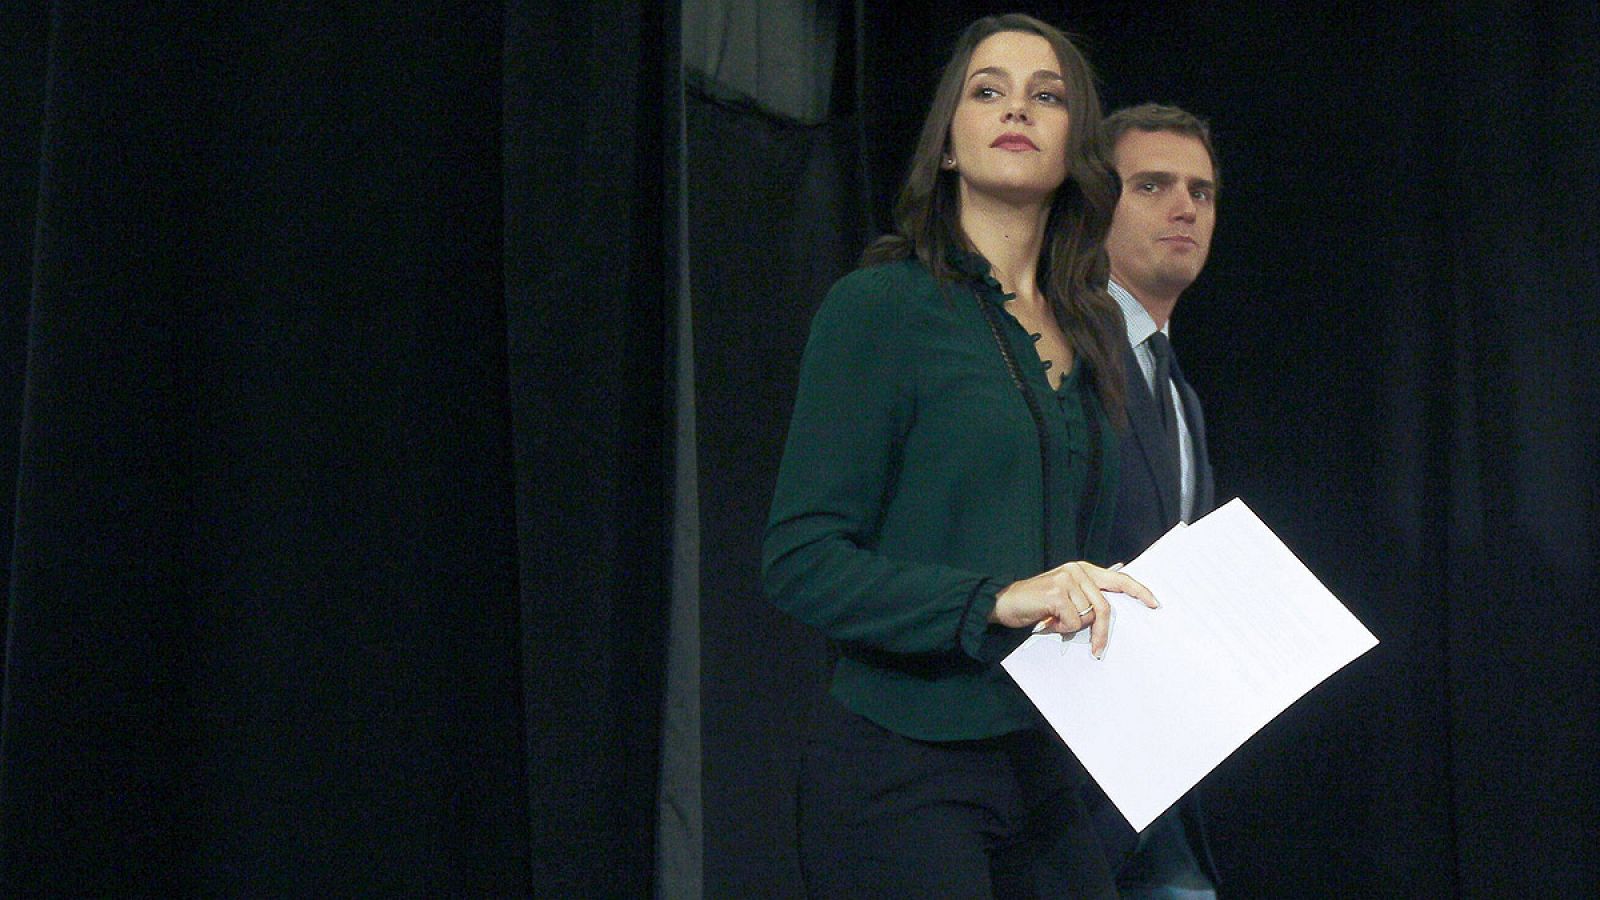 La candidata de C's a la presidencia de la Generalitat, Inés Arrimadas, y el líder del partido, Albert Rivera